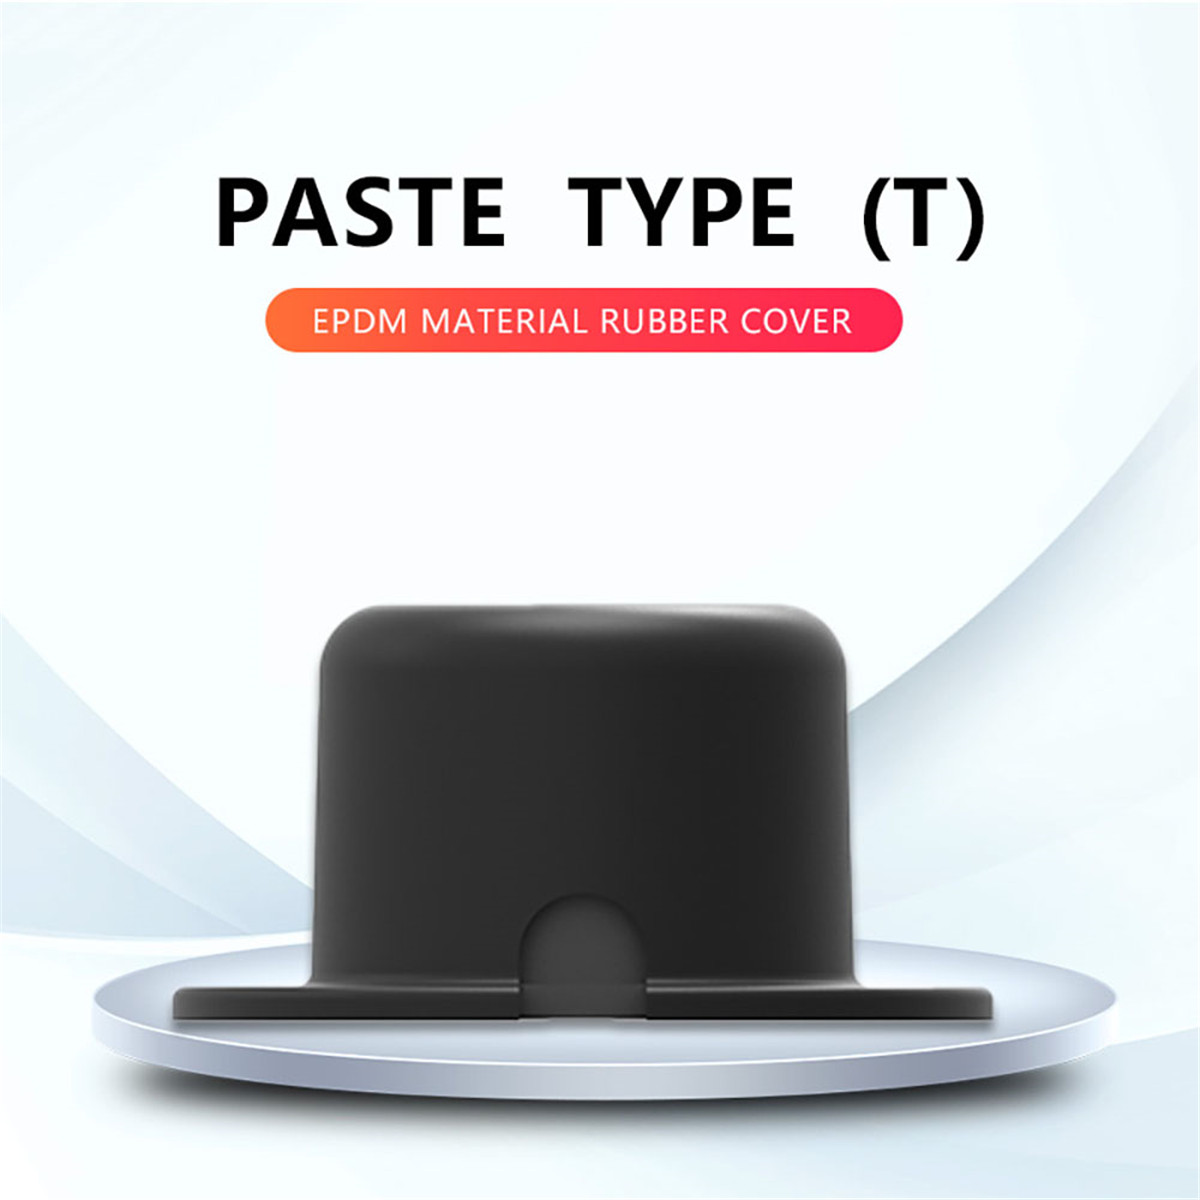 Paste type01 (8)